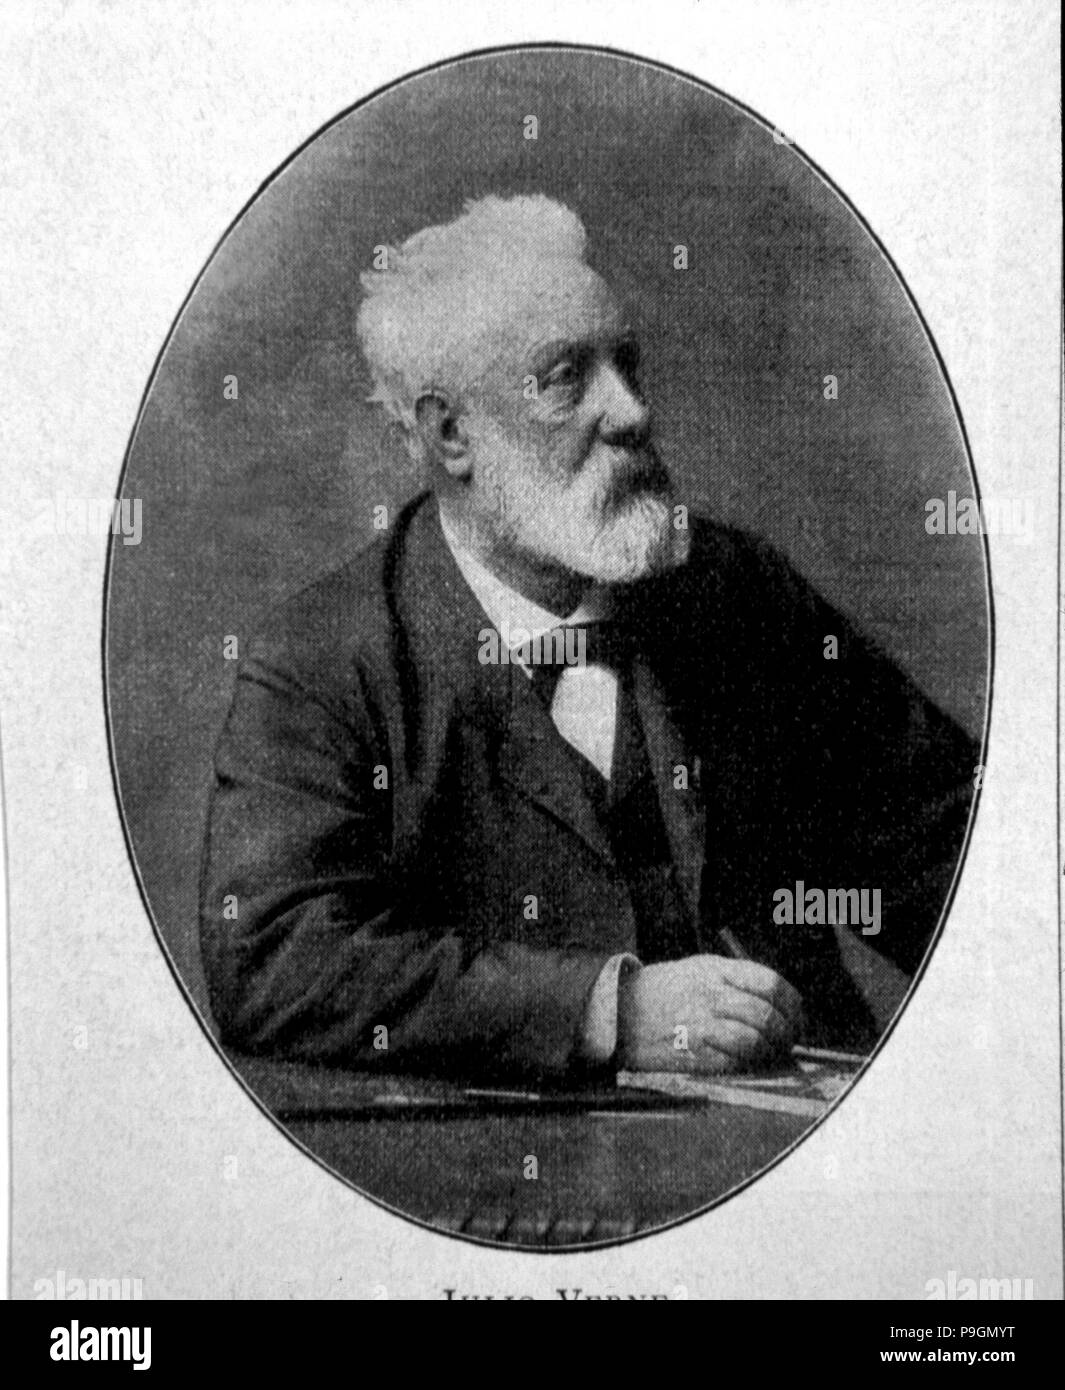 Verne, Jules (1828-1905, French writer, photo of 'Ilustración Artística', 1900. Stock Photo